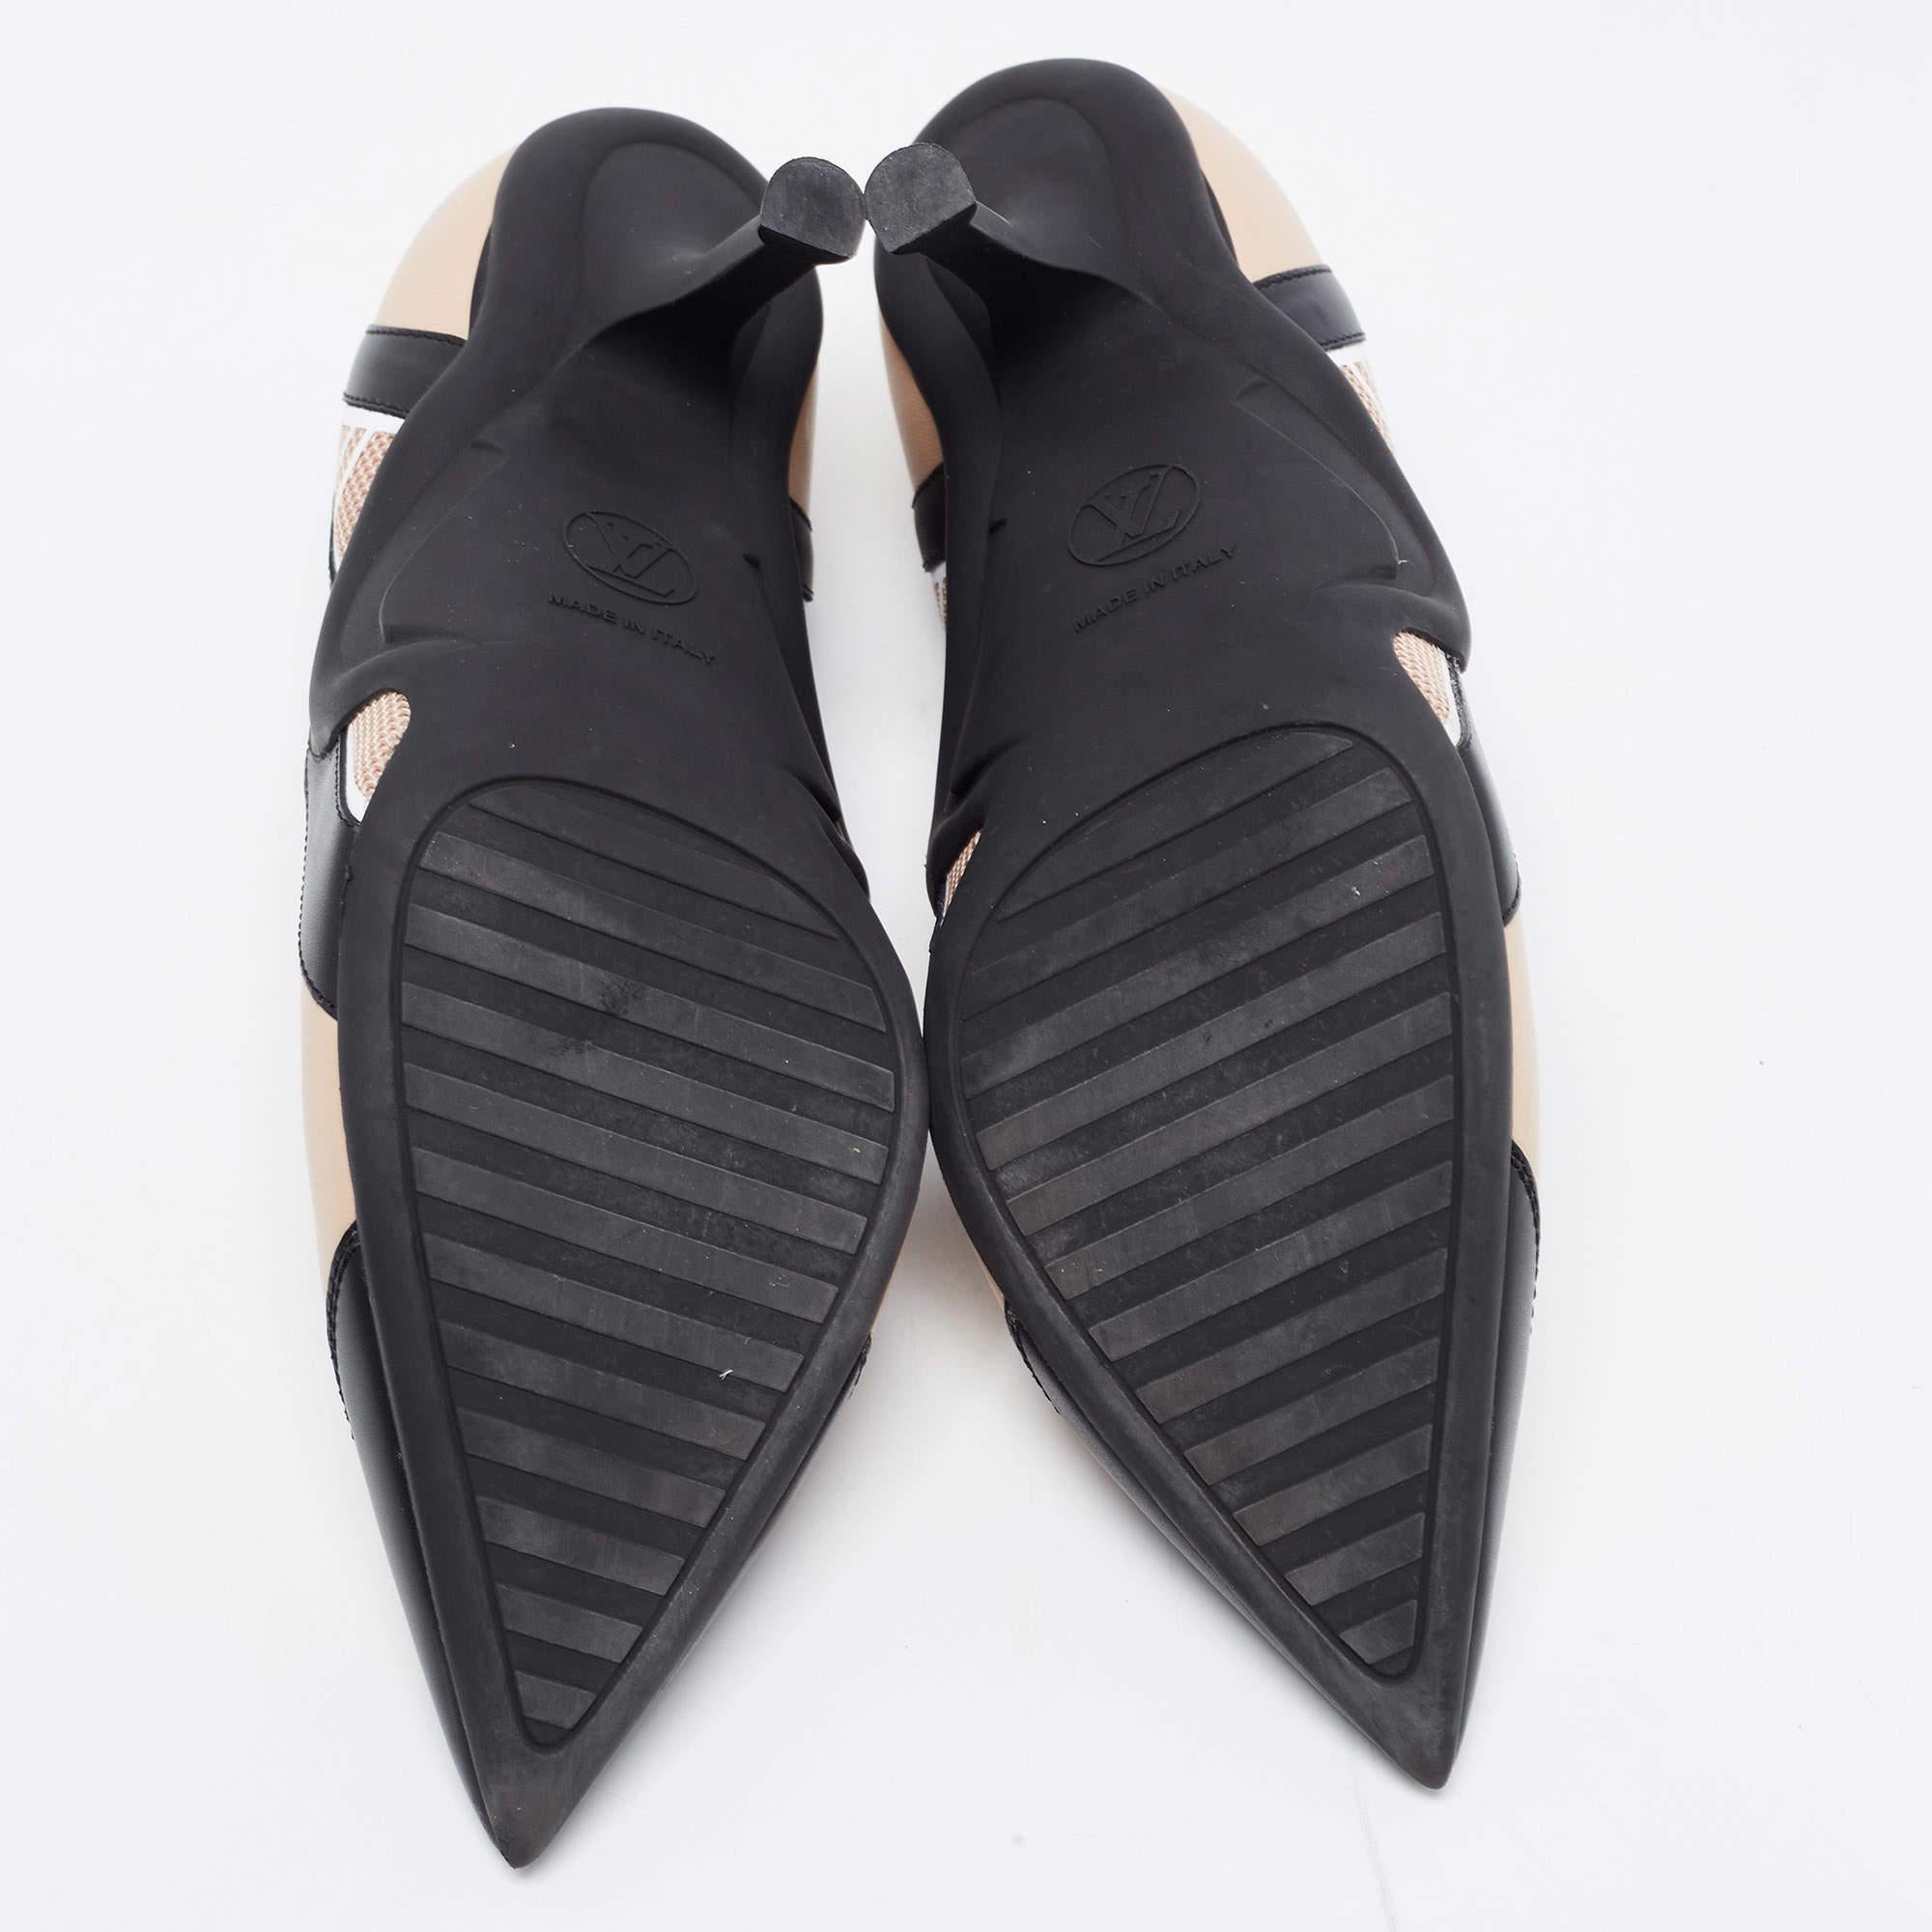 Louis Vuitton Black/Beige Leather and Mesh Archlight Pumps Size 40 4